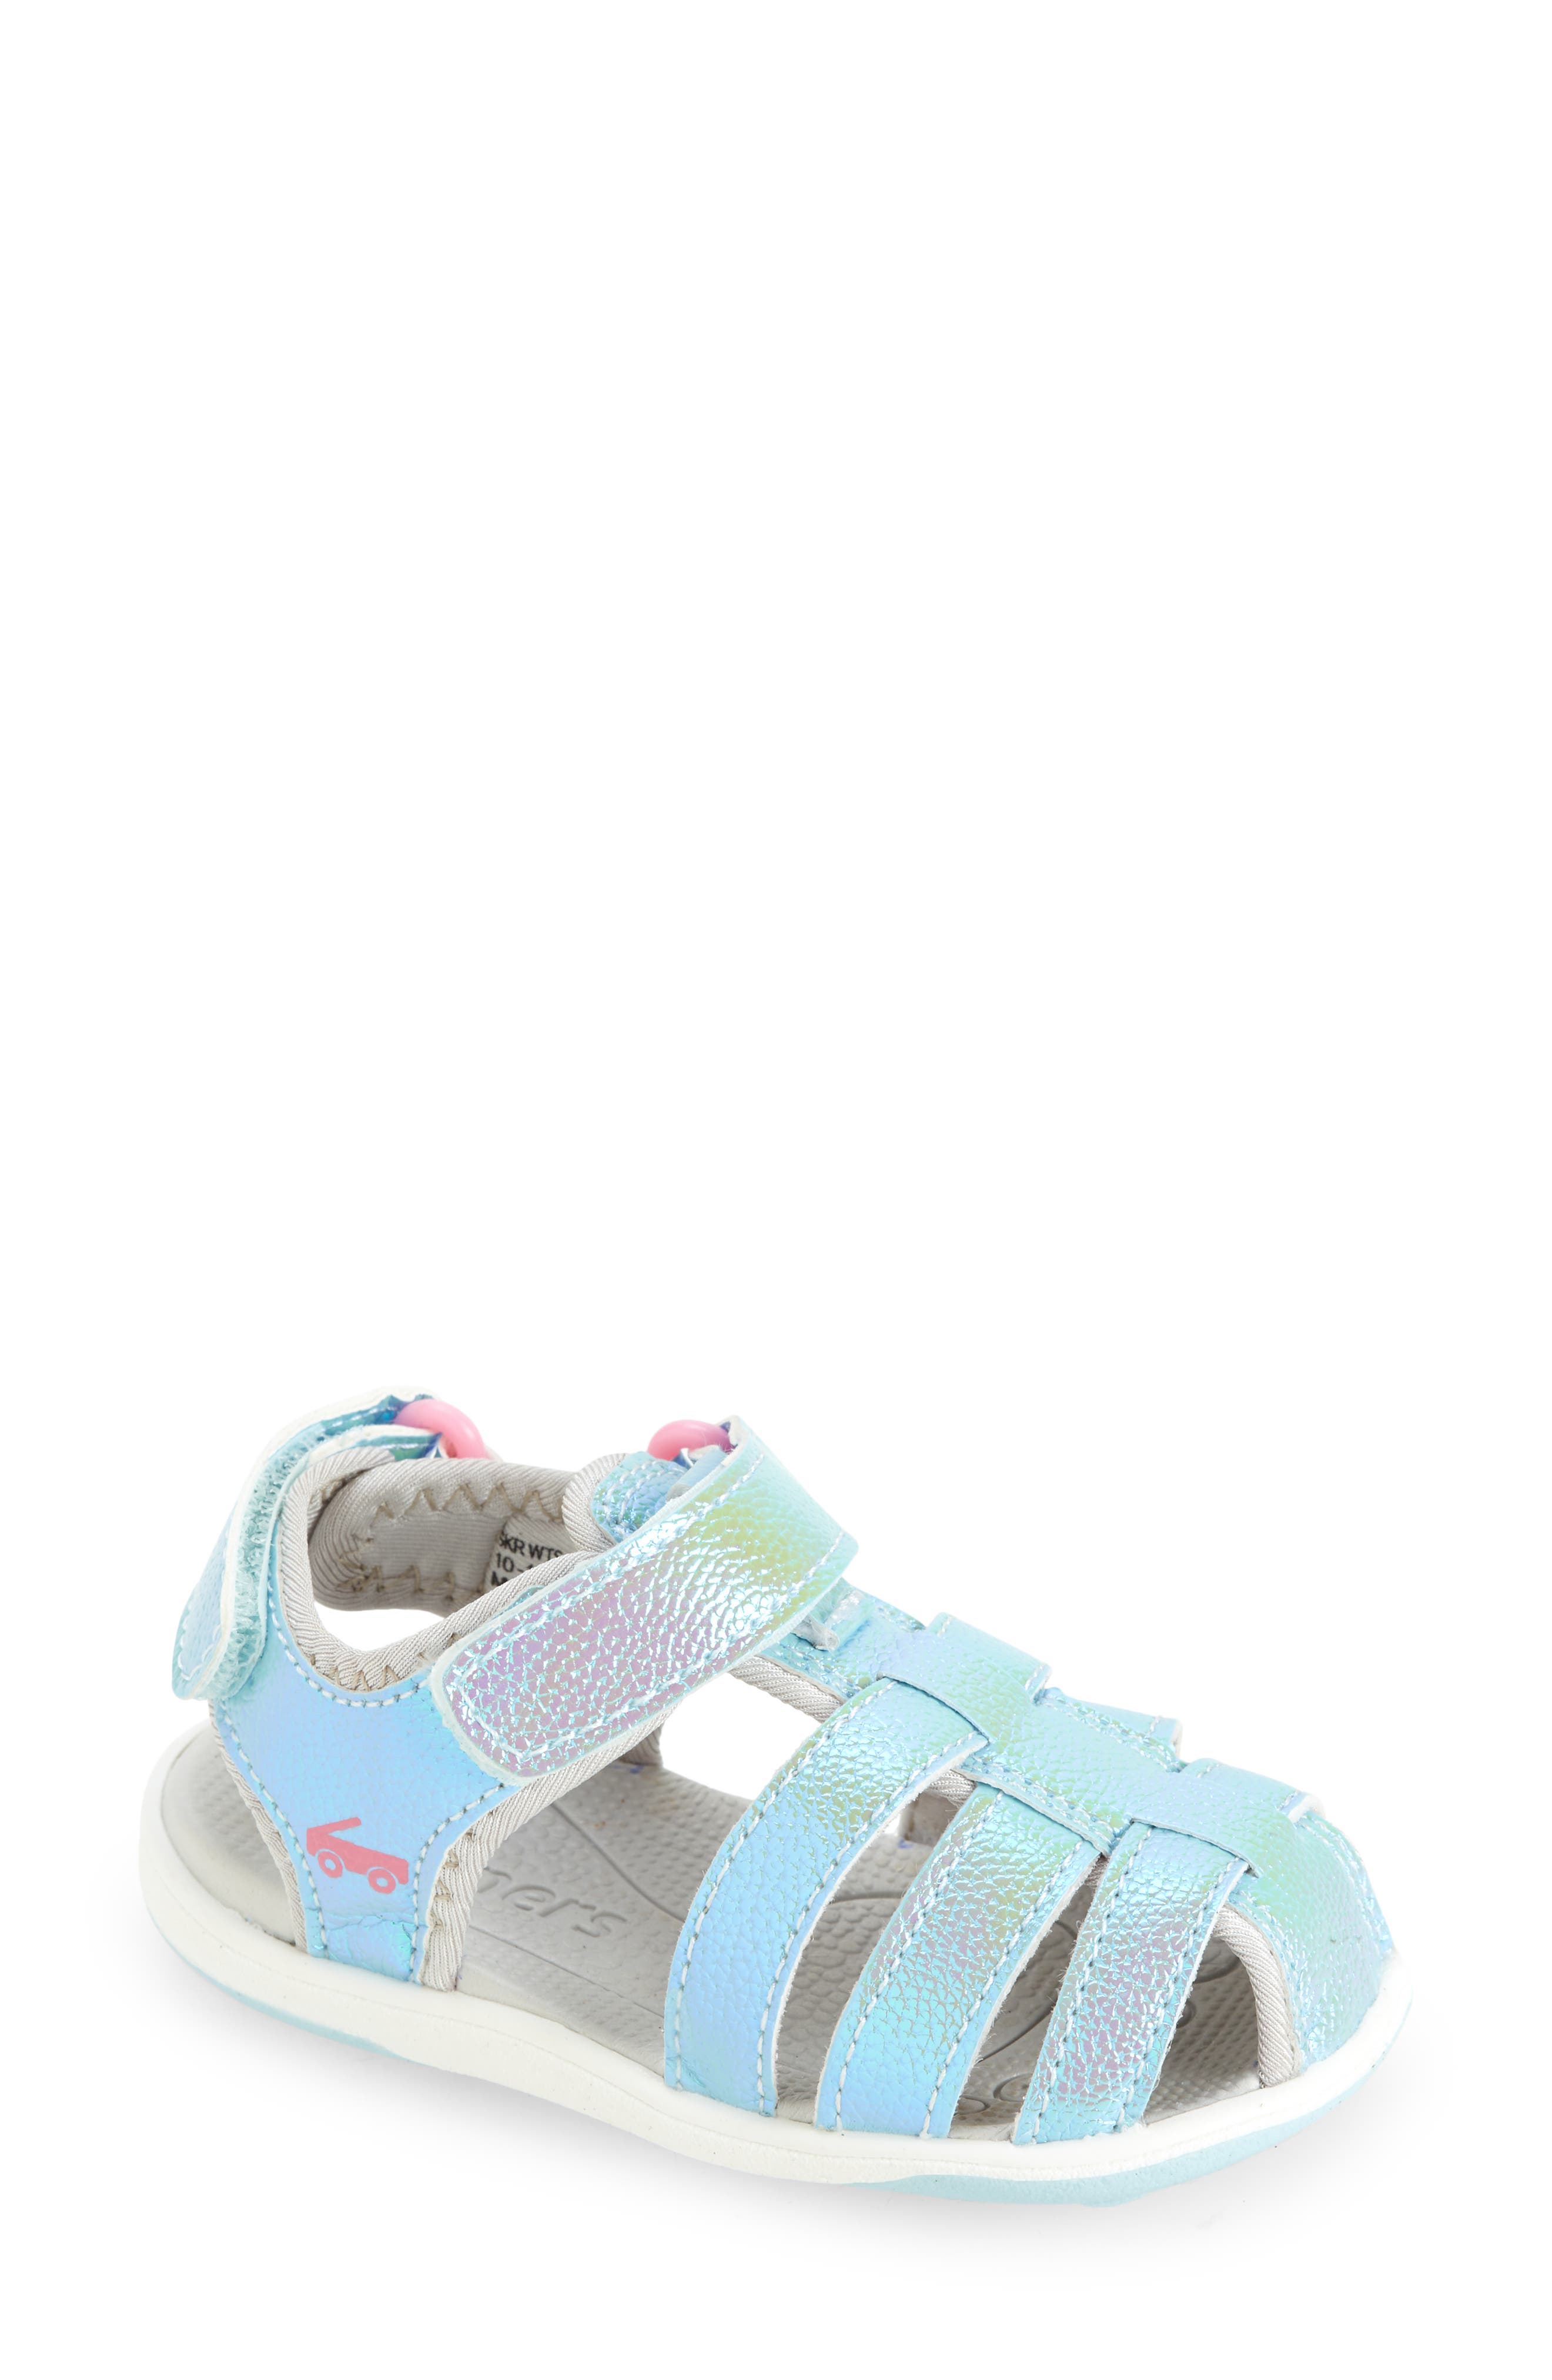 8 9 See Kai Run Paley II Toddler Girl Slip-on Sandal Silvr/Purpl US Size 6 7 